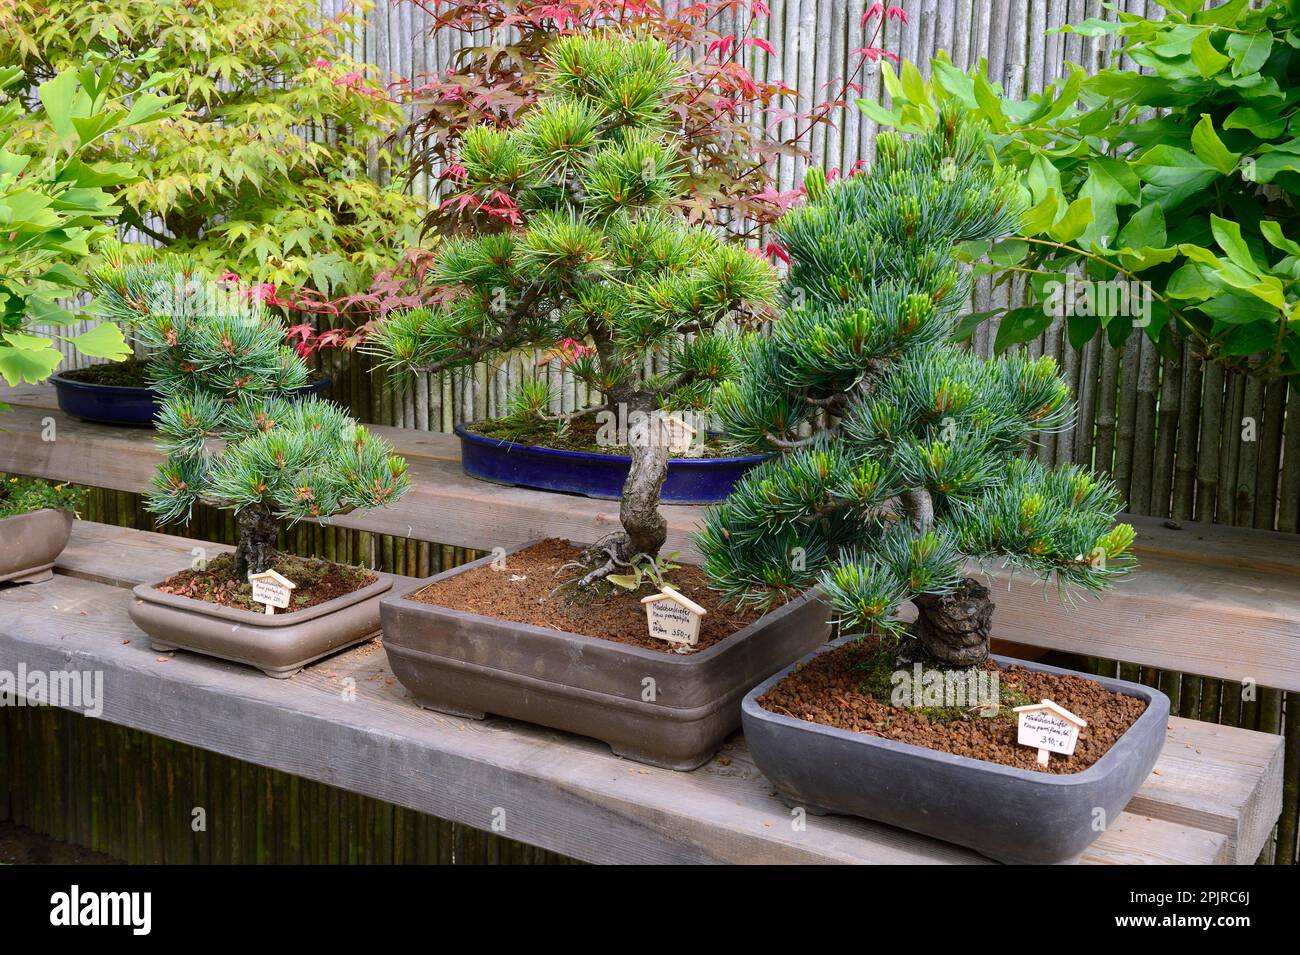 Scots pine (Pinus pentaphylla), bonsai Stock Photo